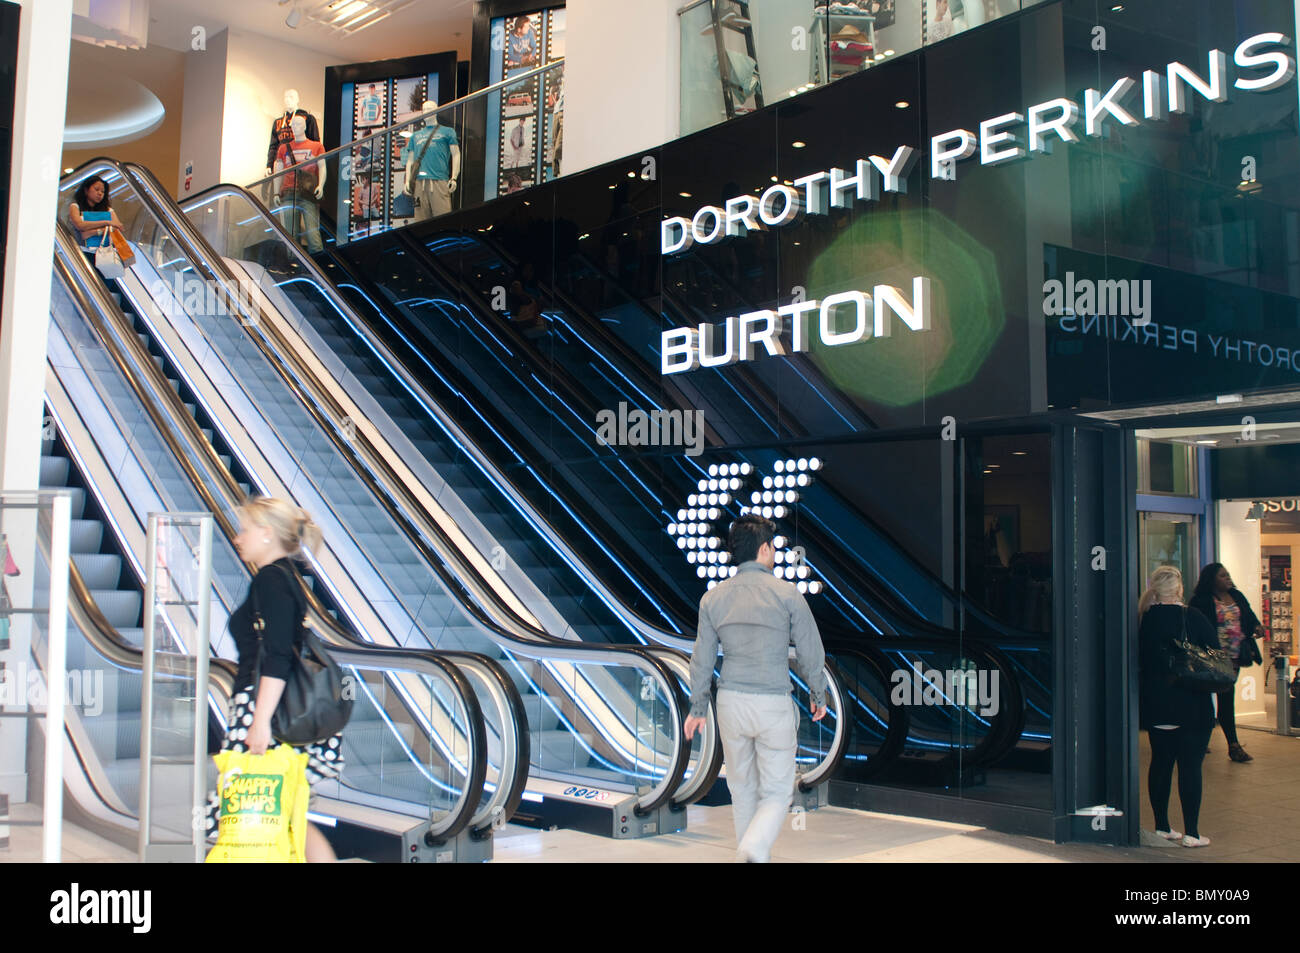 Dorothy Perkins and Burton stores on Oxford Street, London, UK Stock Photo  - Alamy